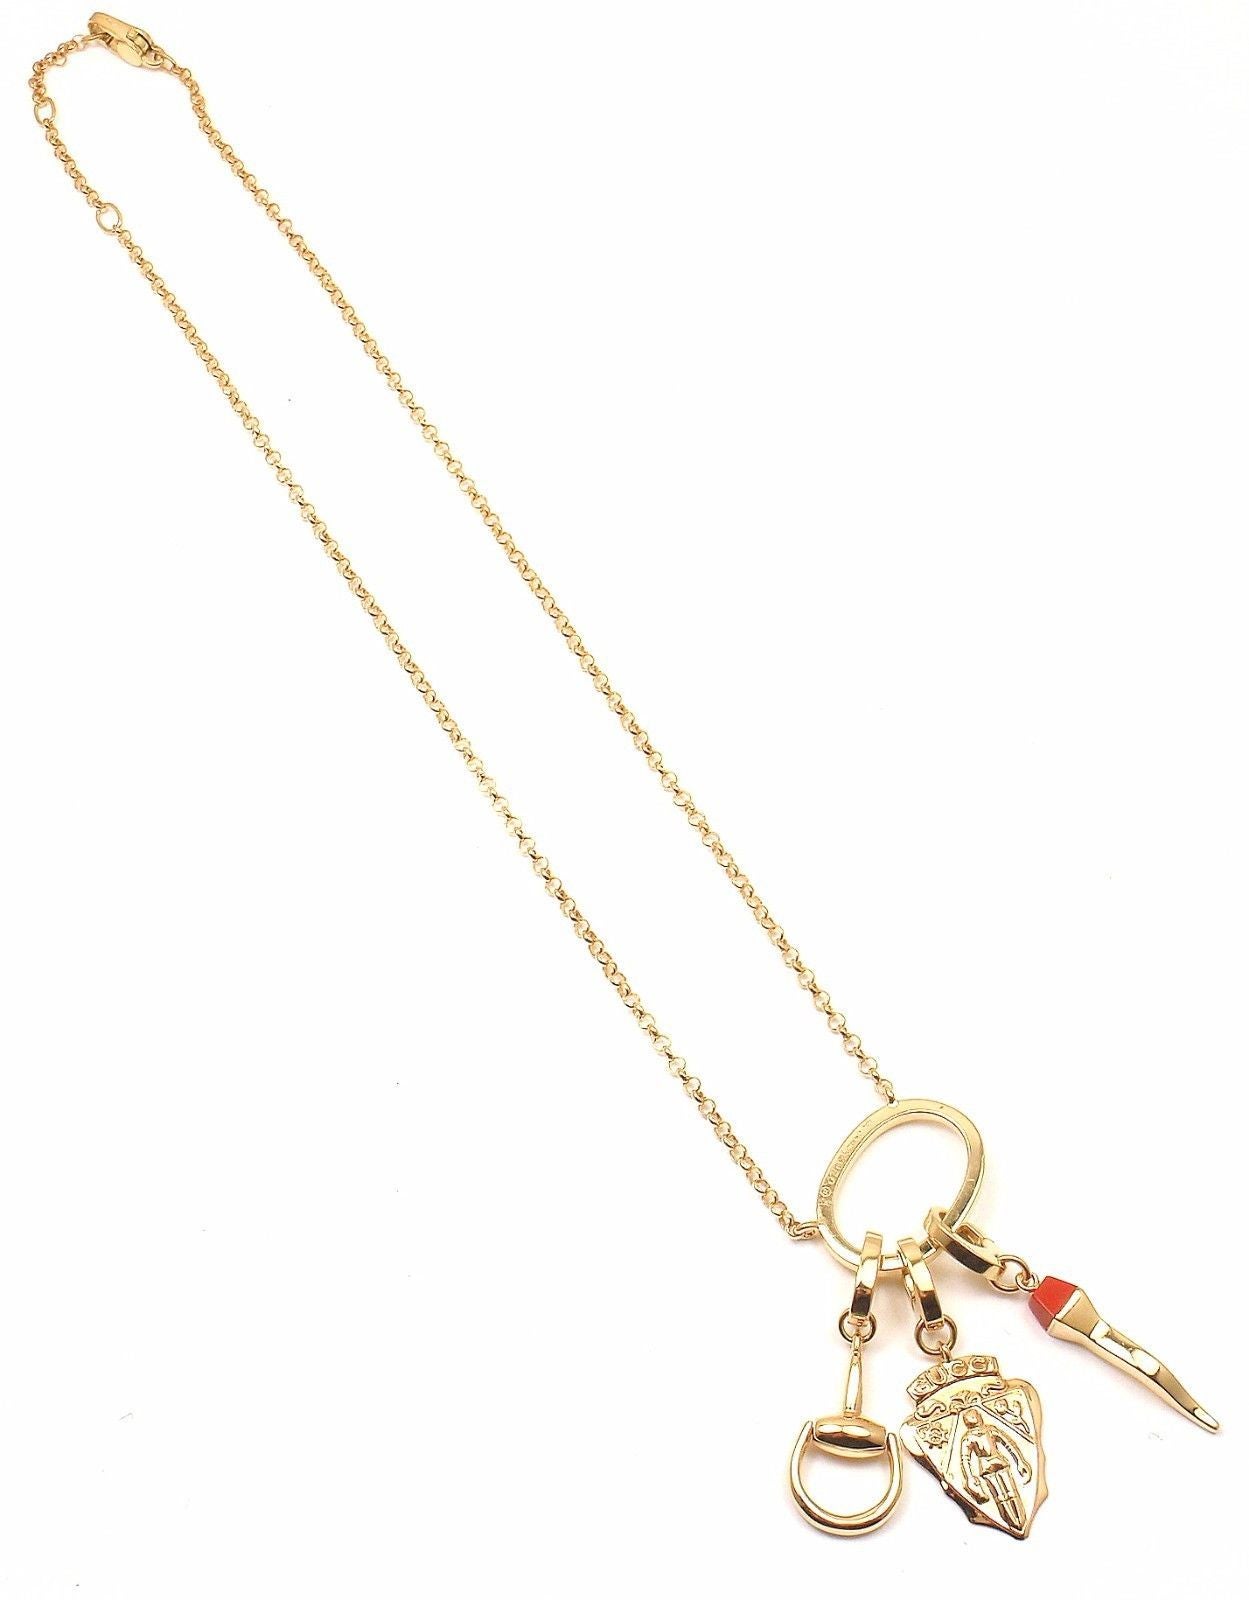 18k yellow gold coral multi-charm emblem horsebit necklace from Gucci.

Measurements:
Measurements: 23mm x 50mm
Length: 16